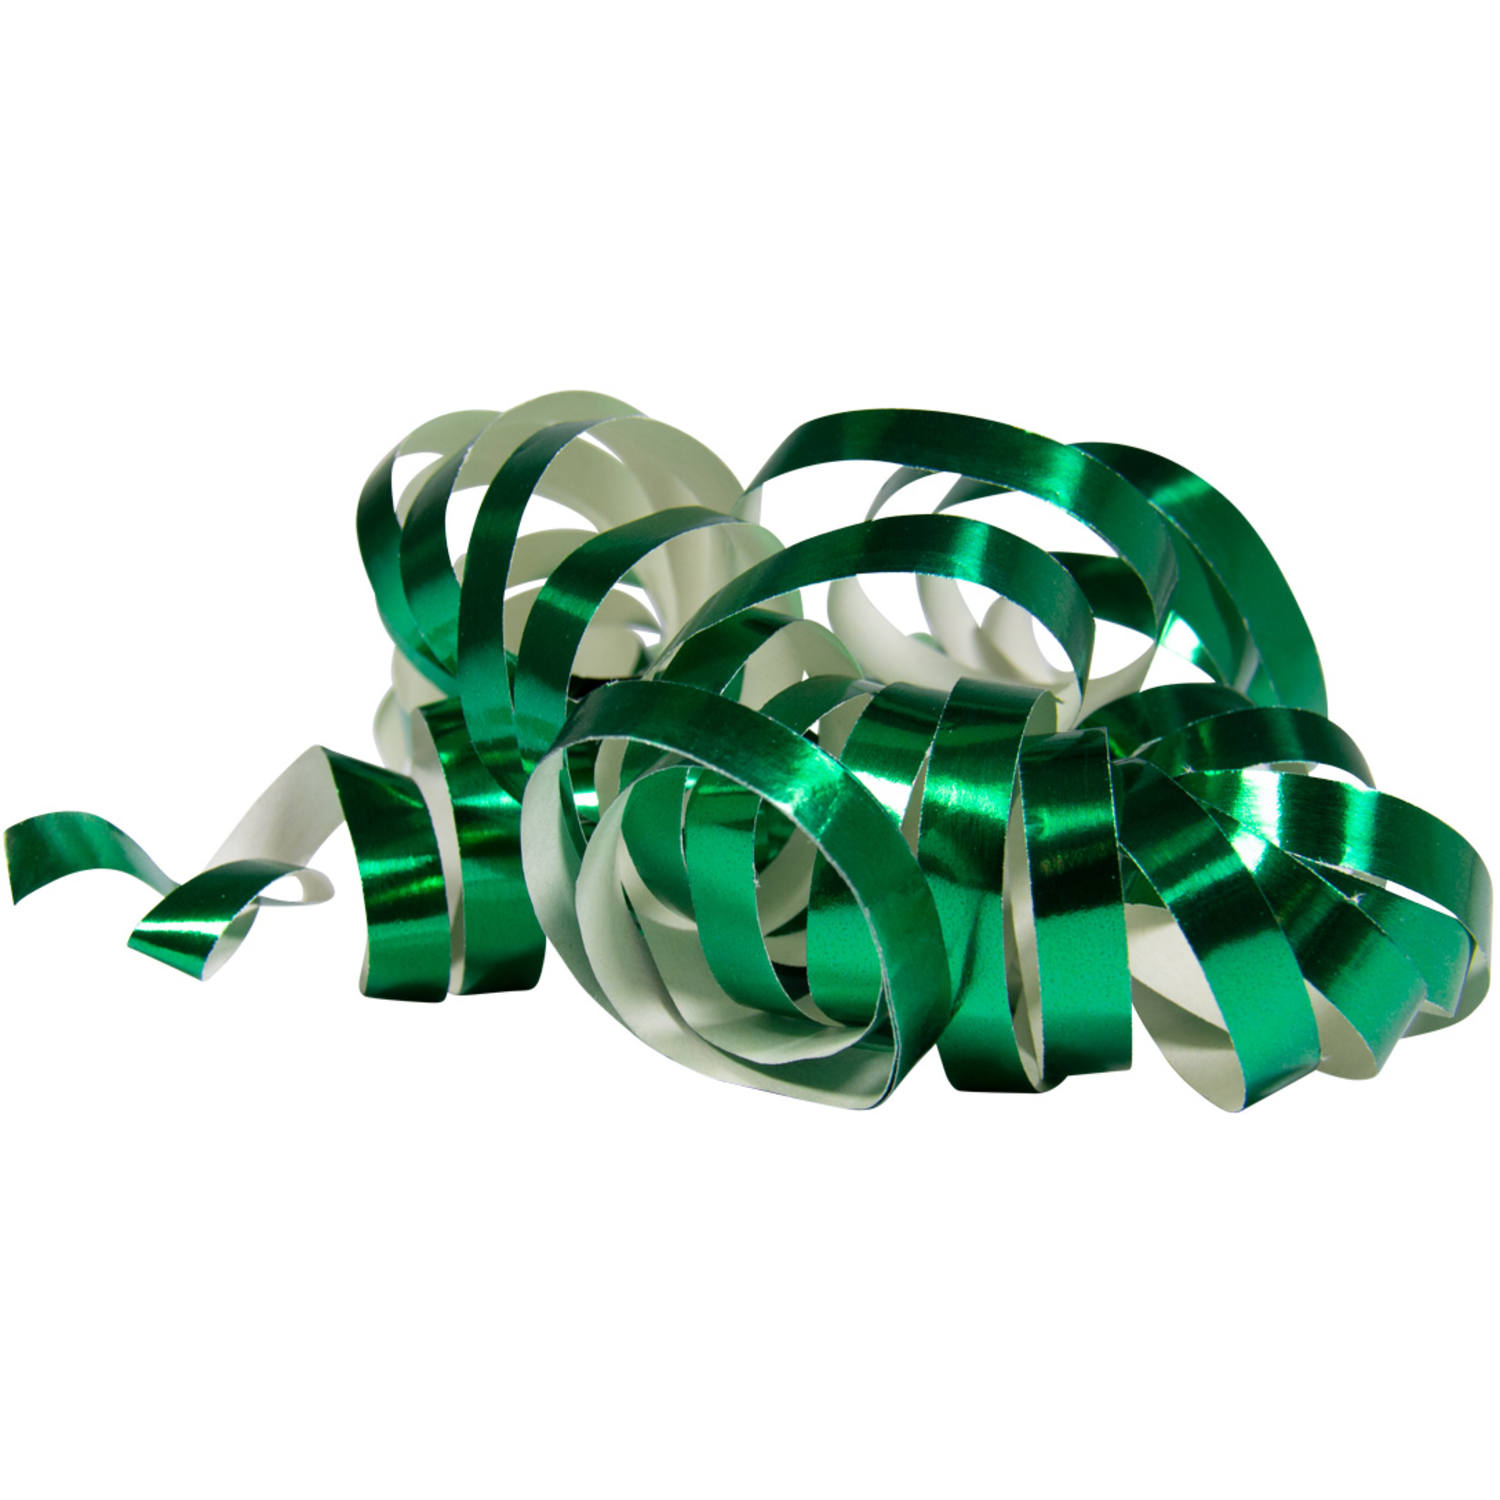 Serpentines Metallic Green 4m - 2 pieces 2